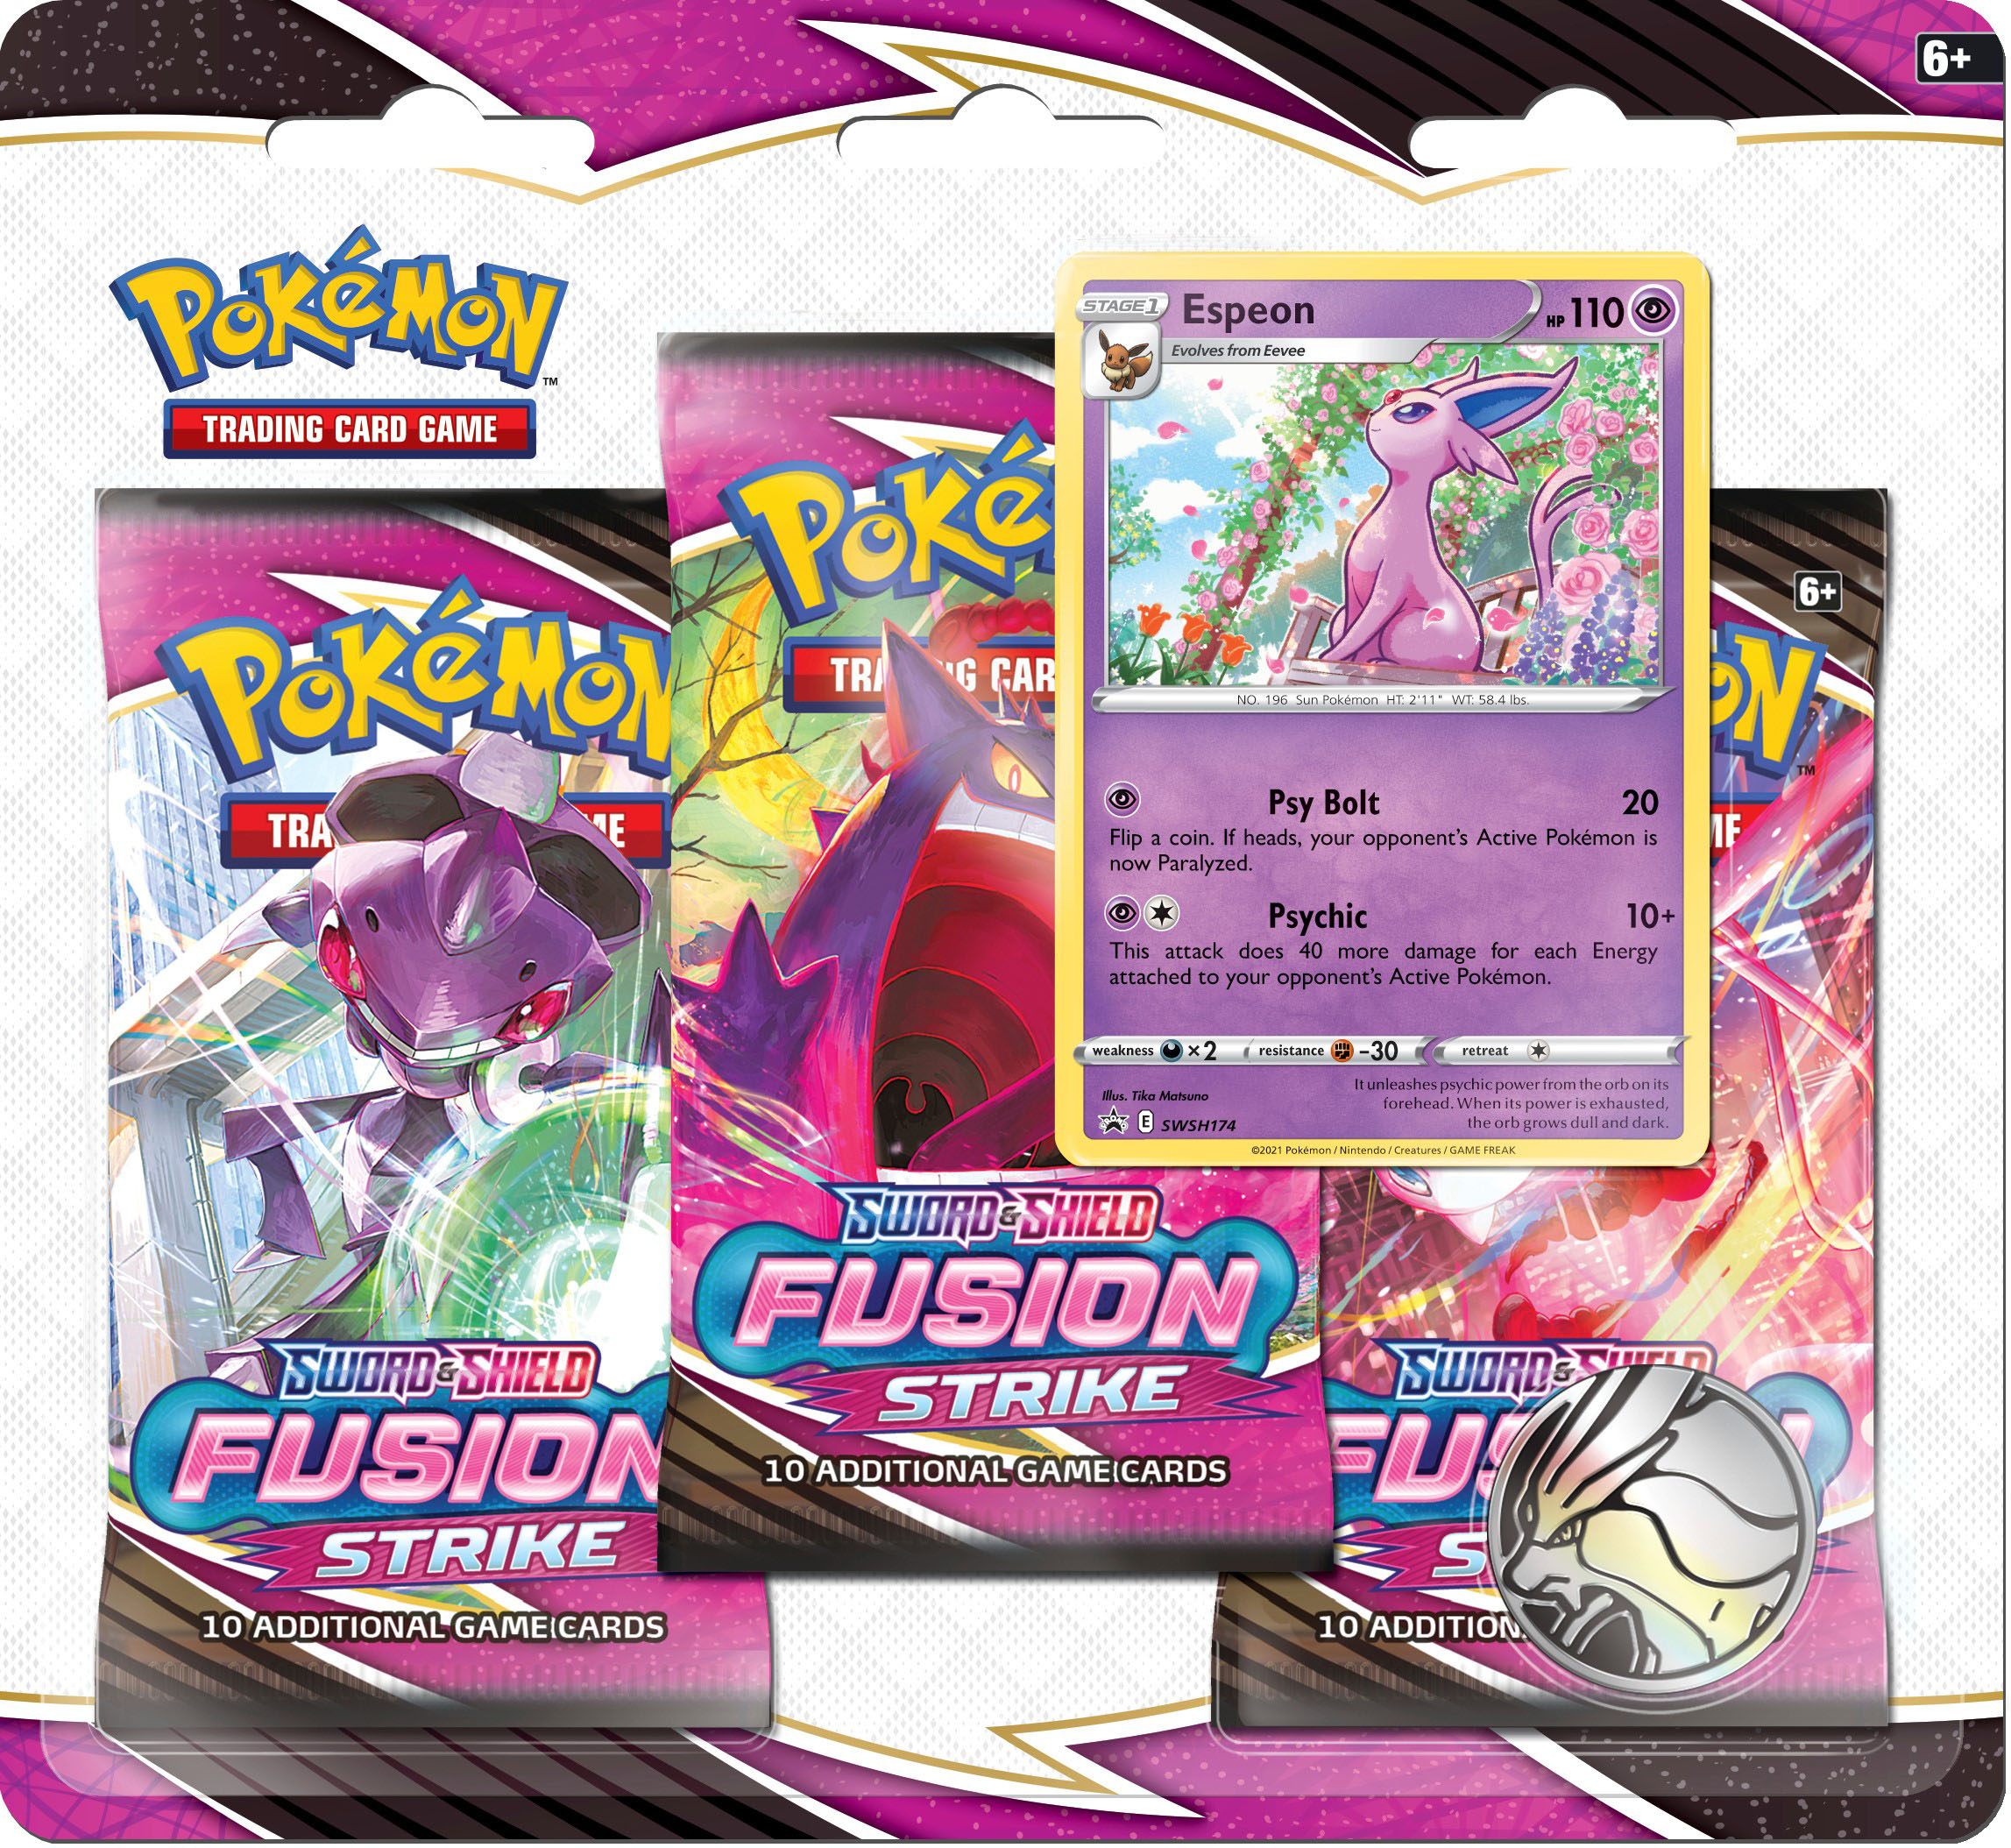 Pokémon - Pokemon TCG: Fusion Strike 3-pack Booster